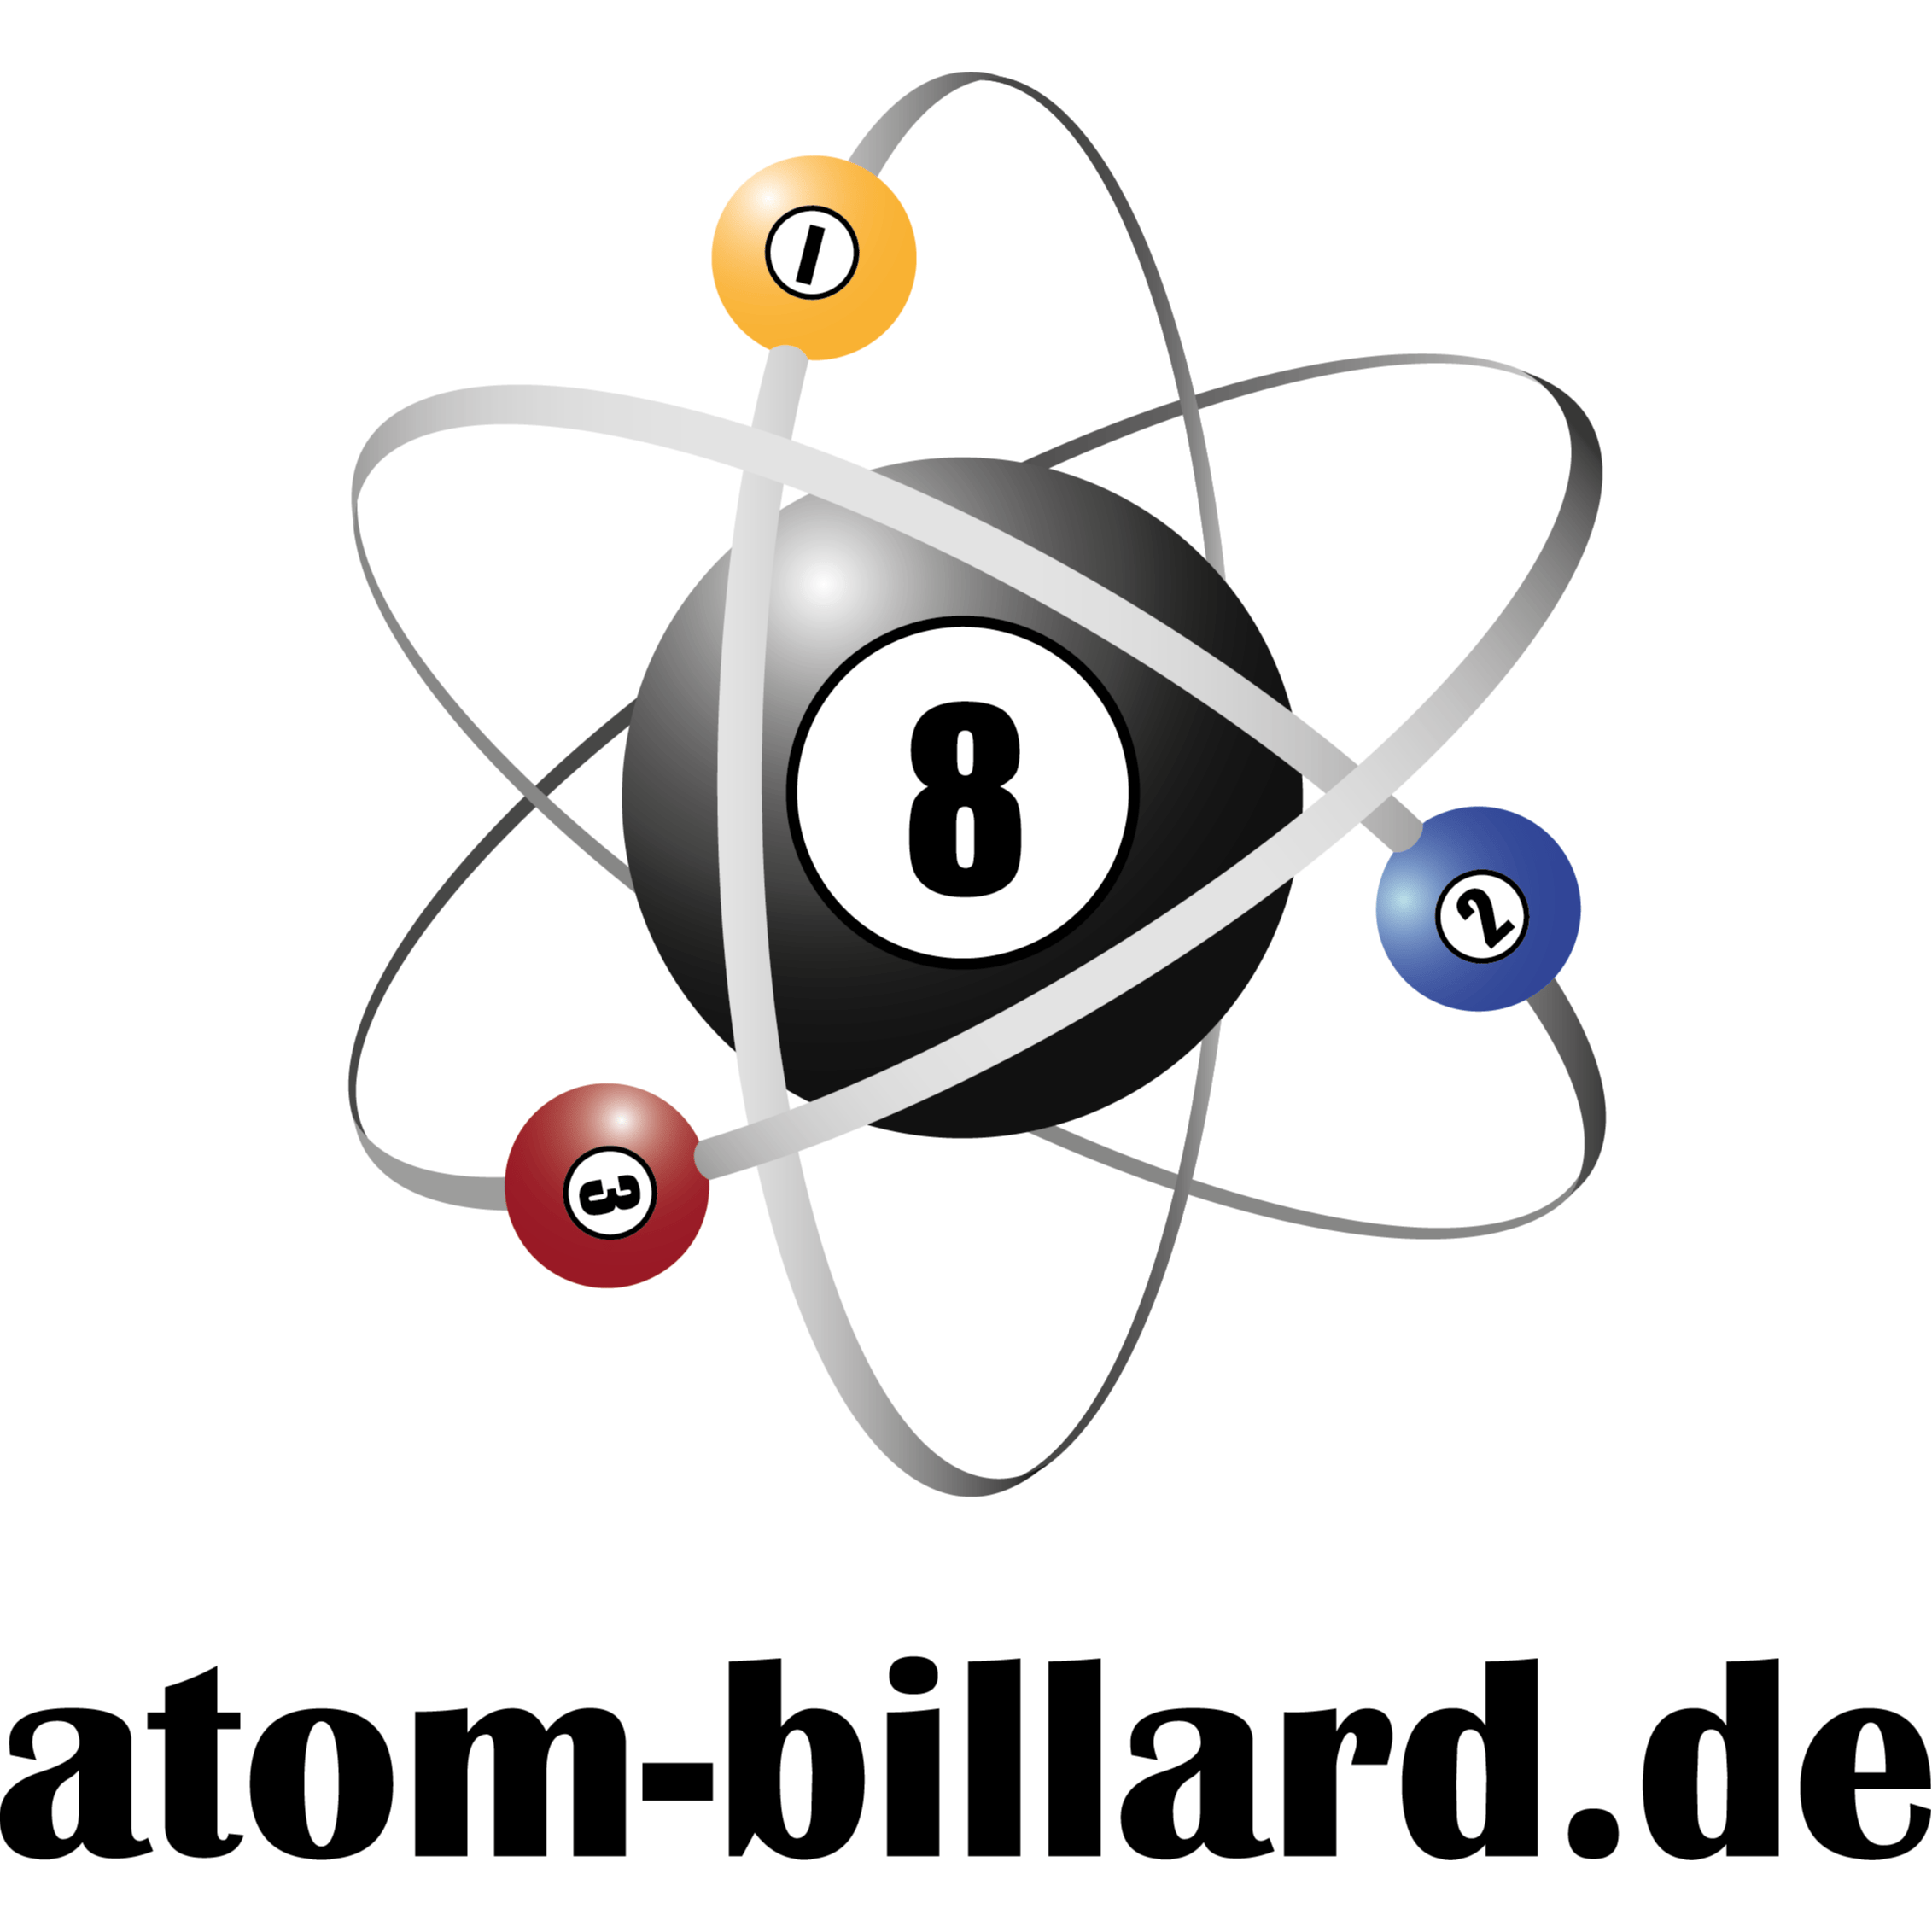 atom-billard.de Billardtische & Billardqueues  